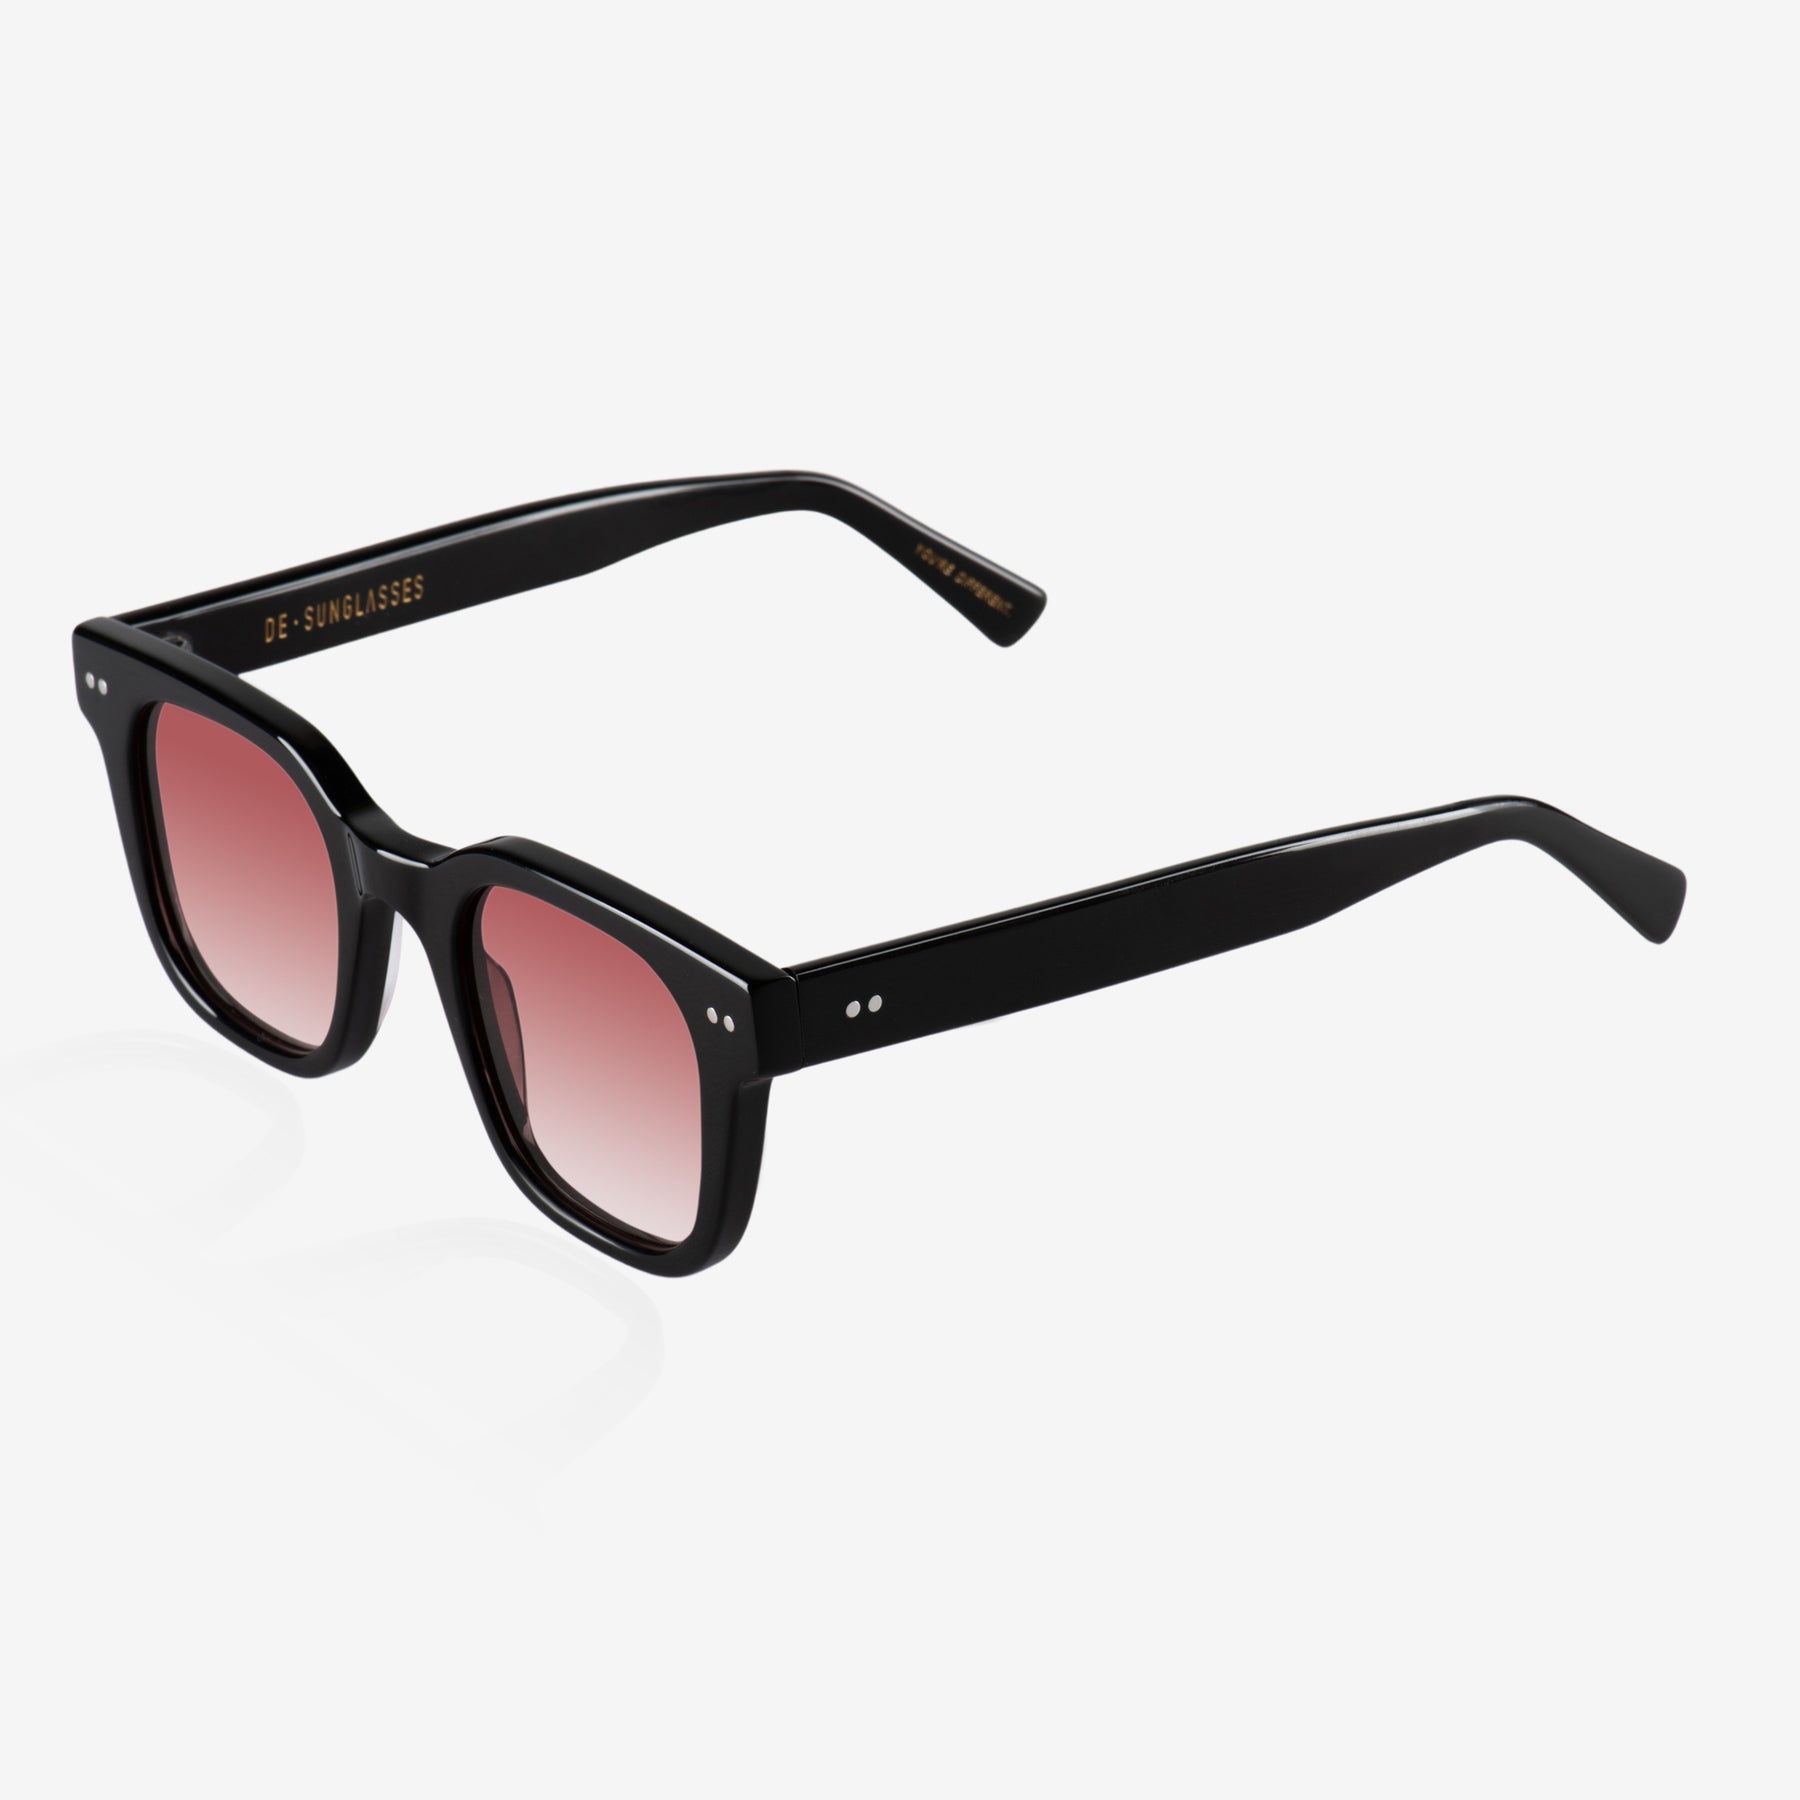 De-sunglasses| Dash cherry | Sunglasses for men and women